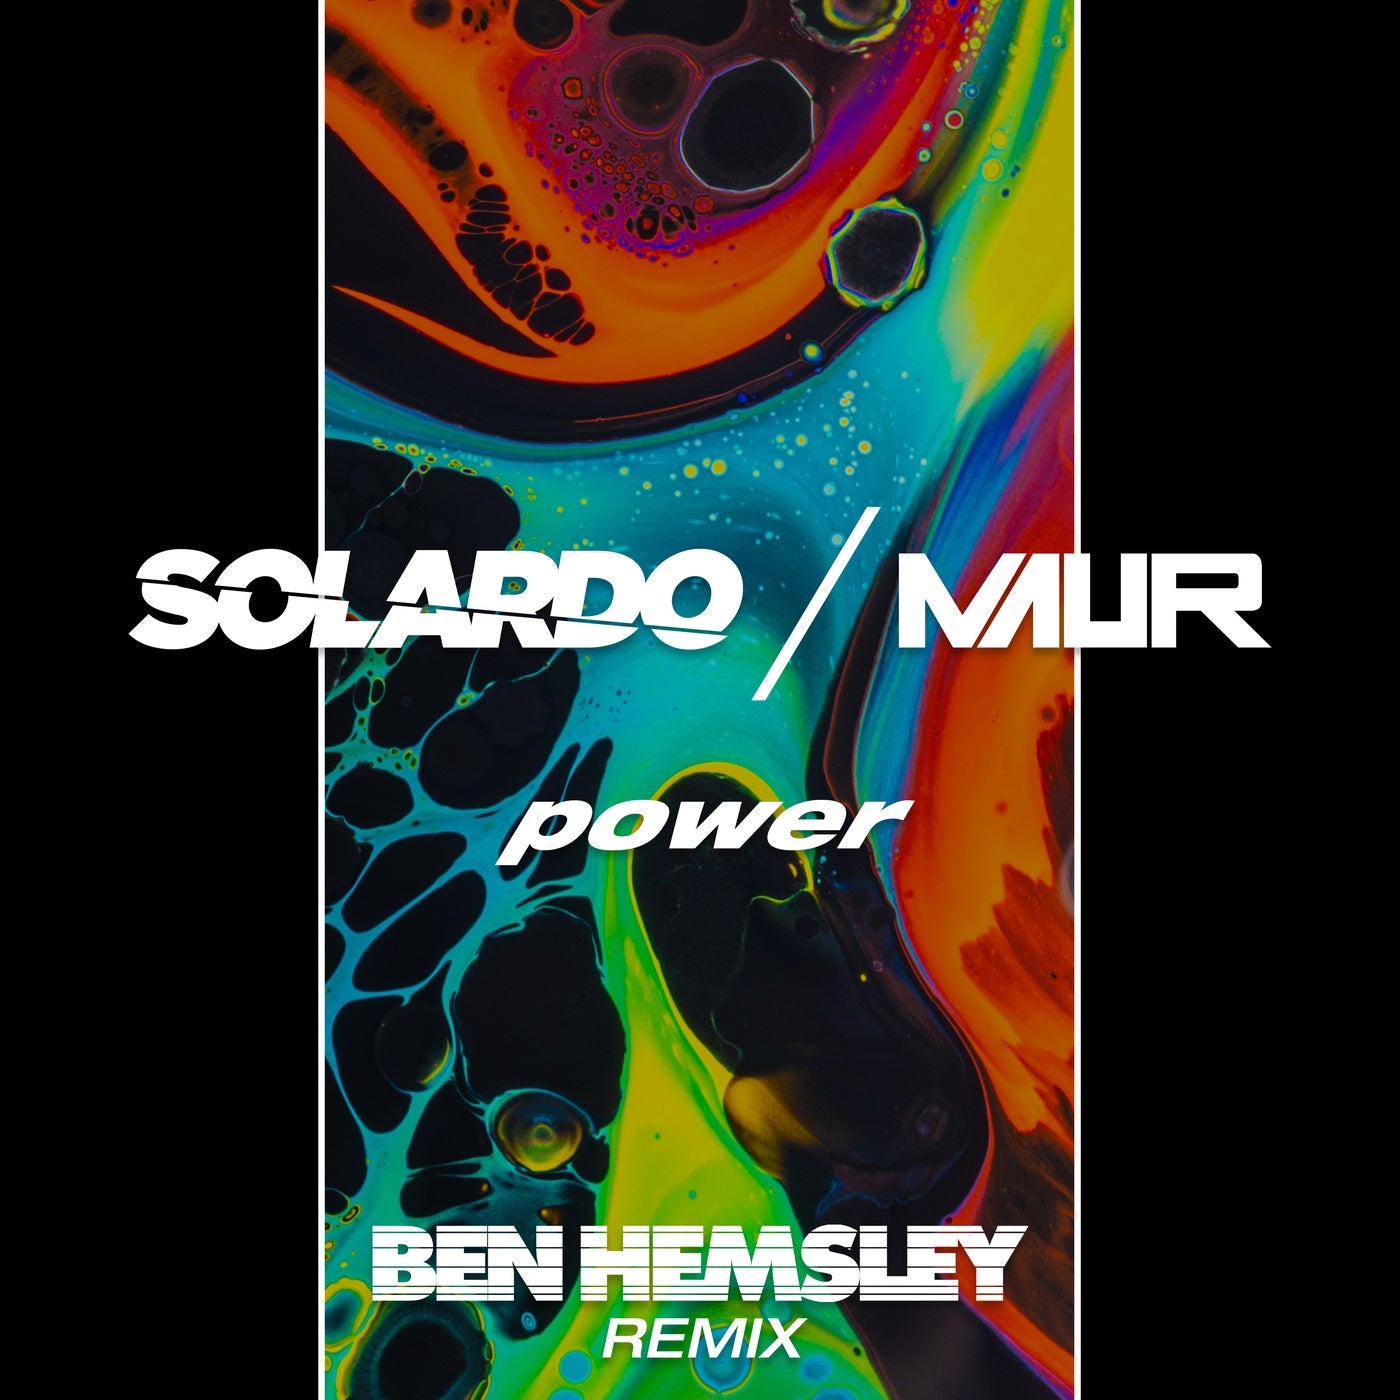 image cover: Maur, Solardo - Power - Ben Hemsley Extended Mix / UL03663